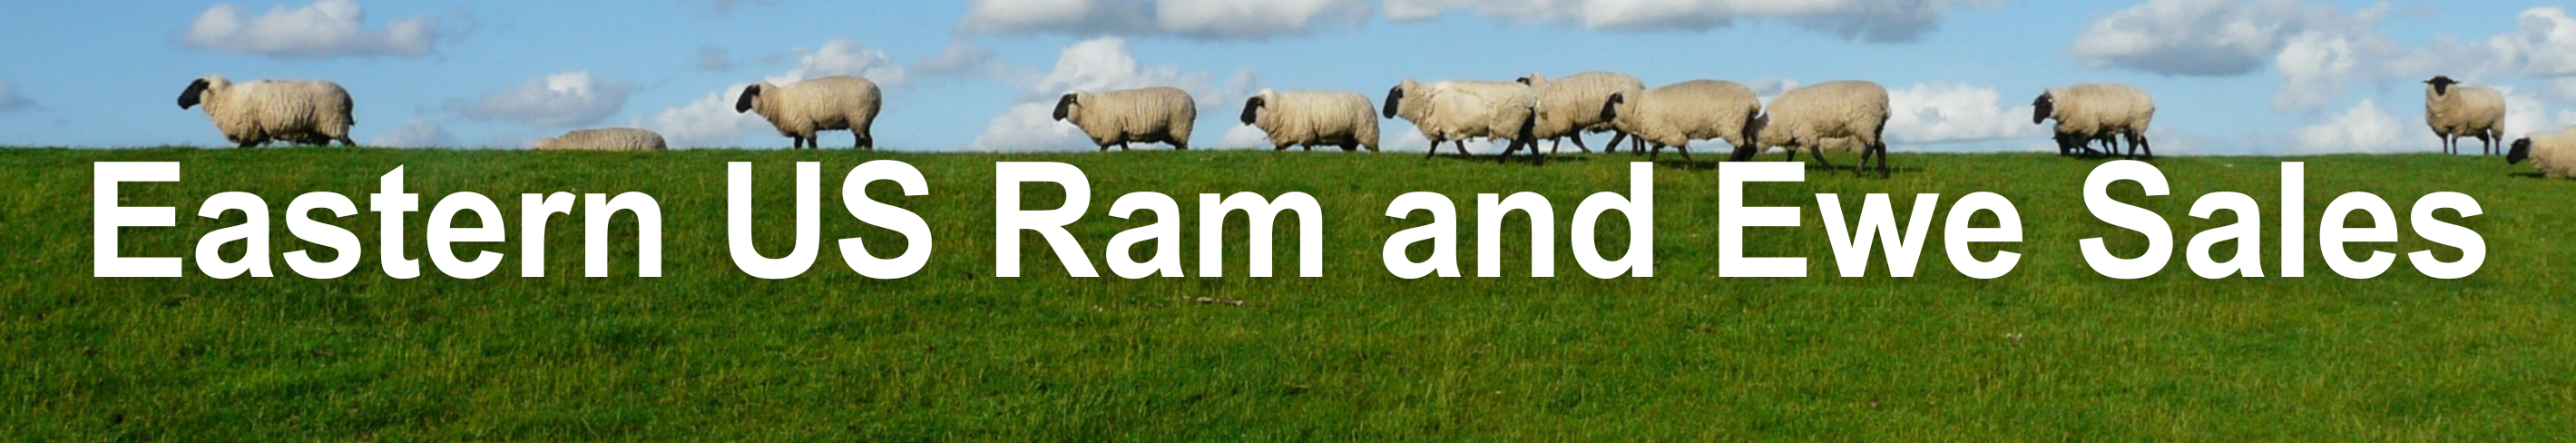 Ram and Ewe Sales Banner